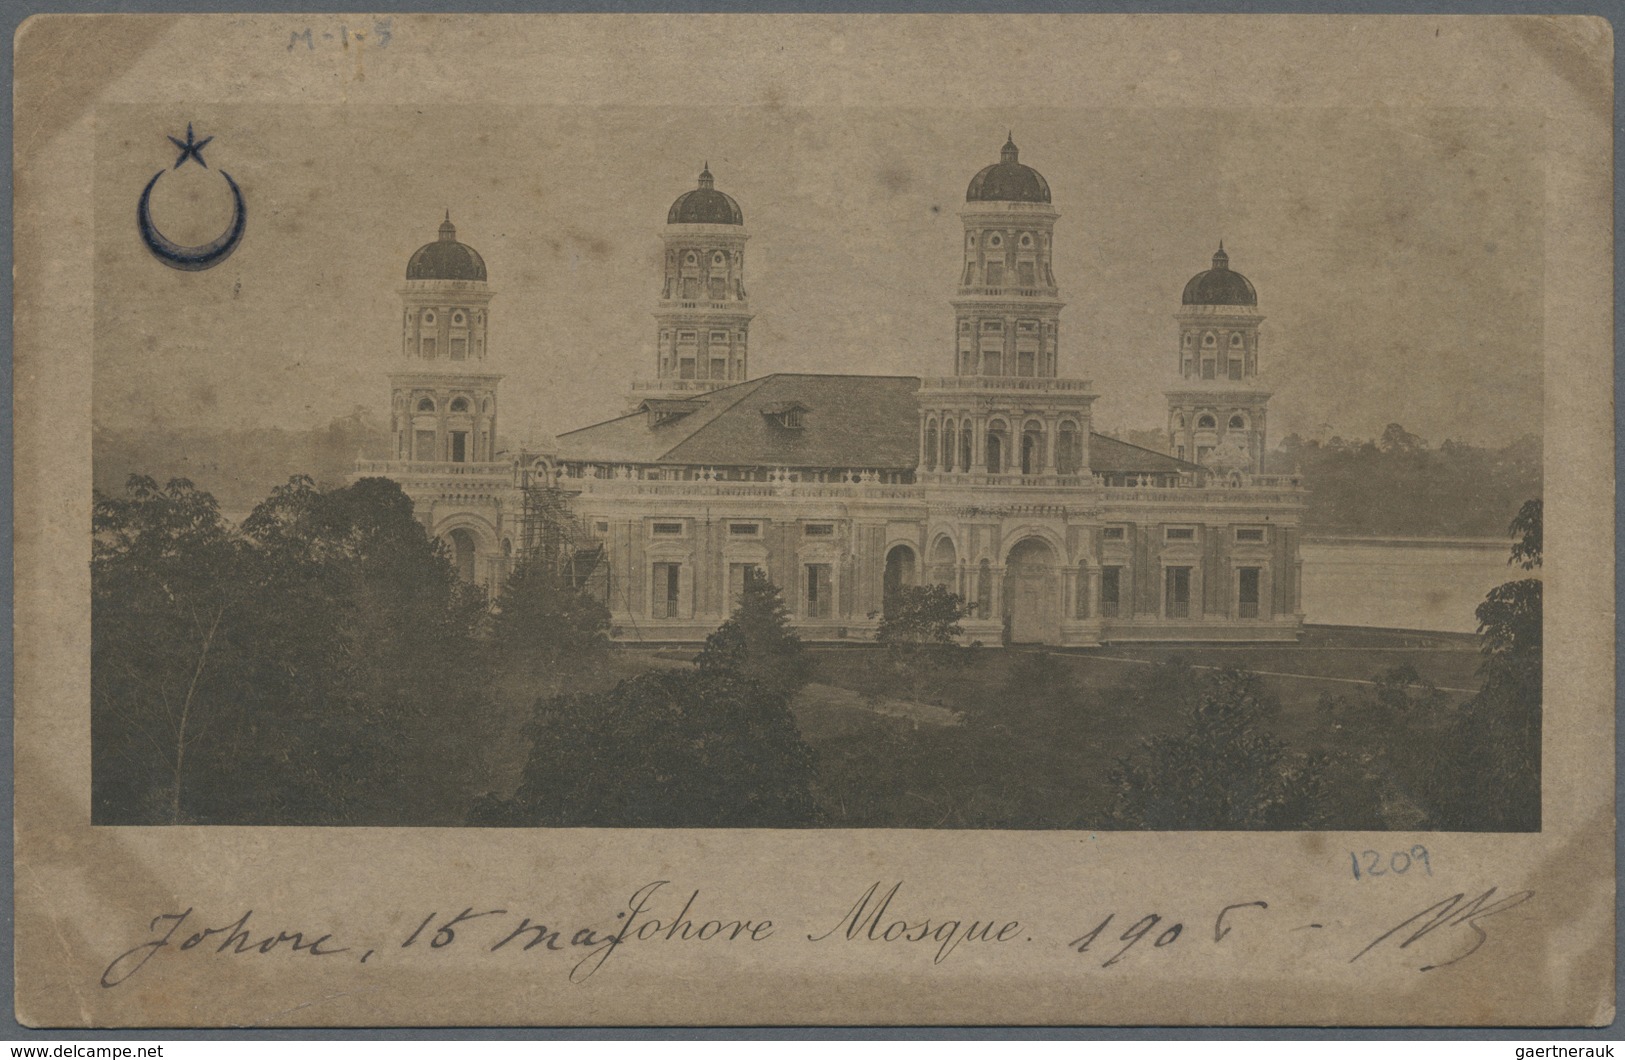 Malaiische Staaten - Johor: 1906, Johore Post Card Bearing Single 'Sultan Sir Ibrahim' 3c. Purple/ol - Johore